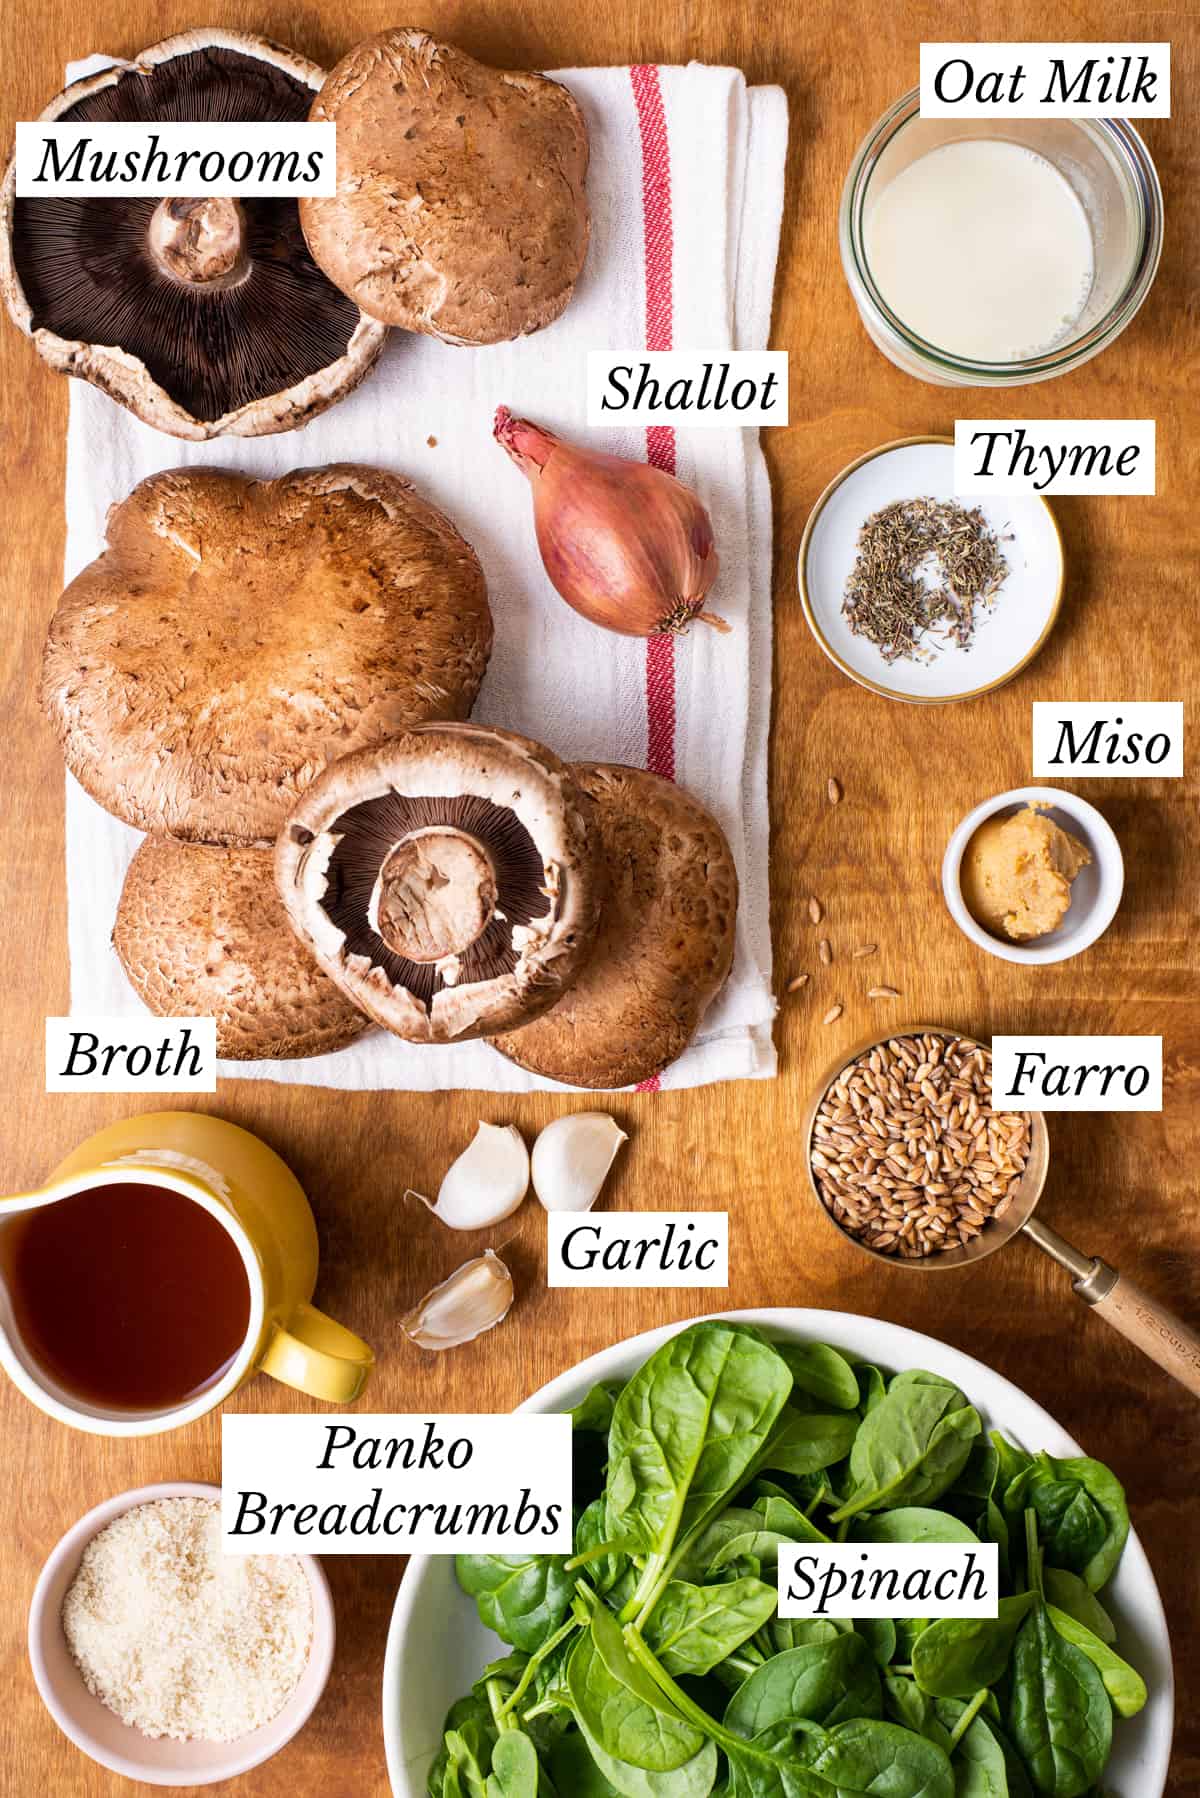 Ingredients gathered on a wooden table to make vegan stuffed portobello mushrooms.